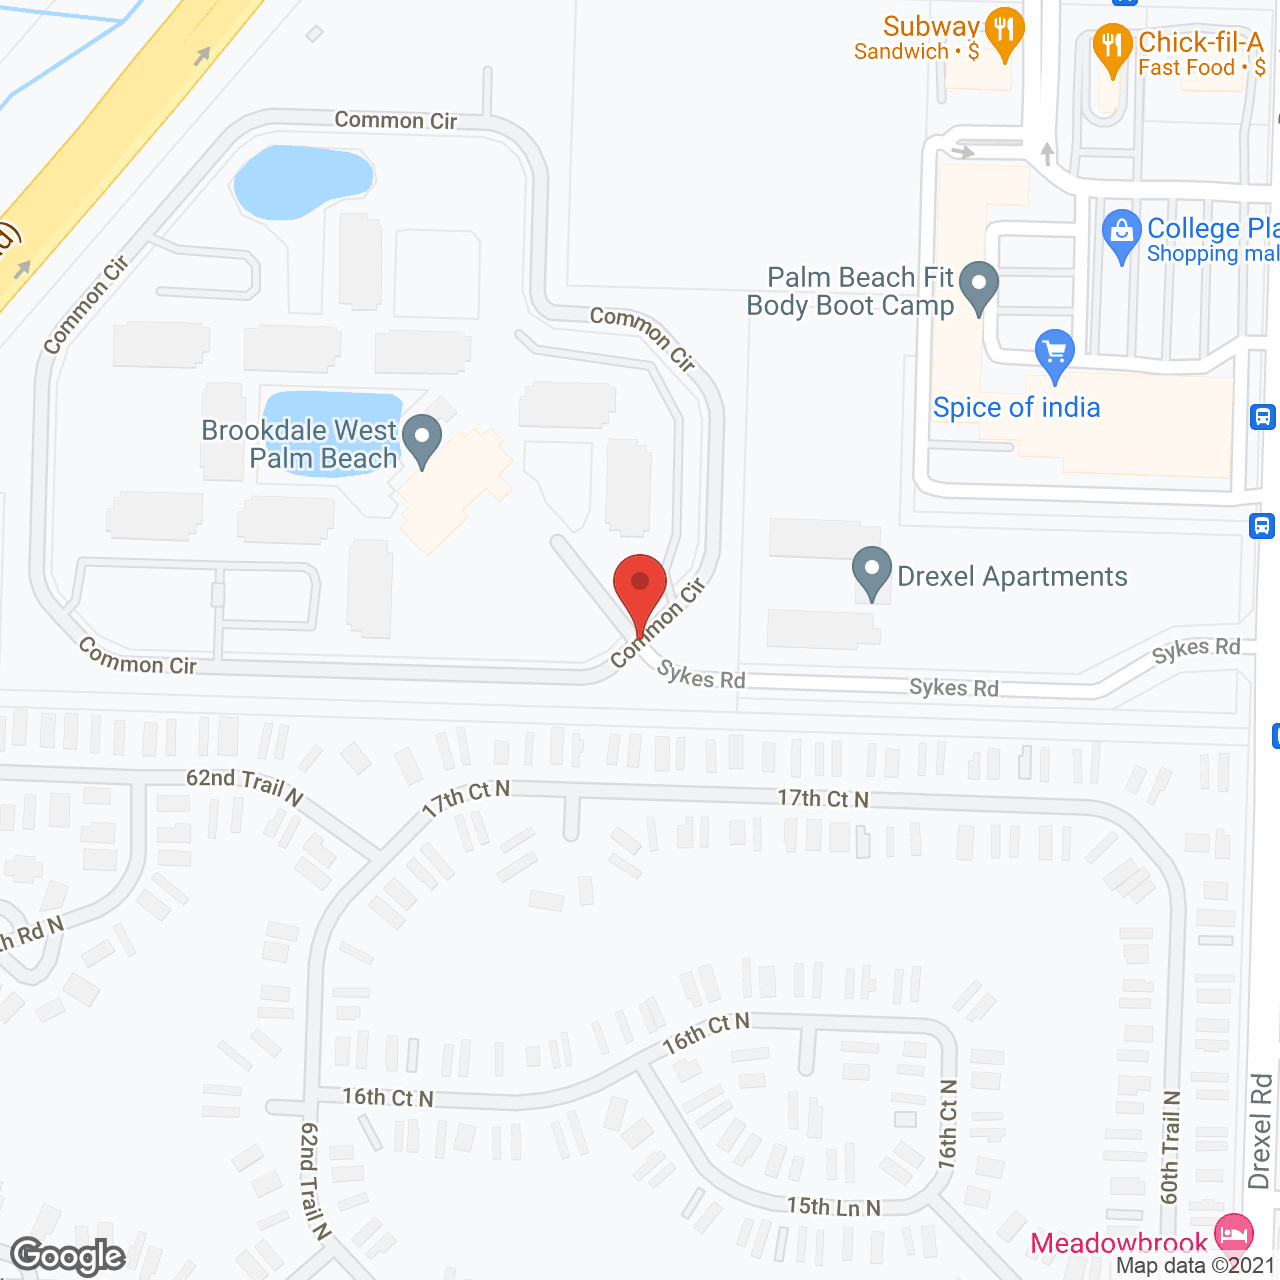 Brookdale West Palm Beach in google map